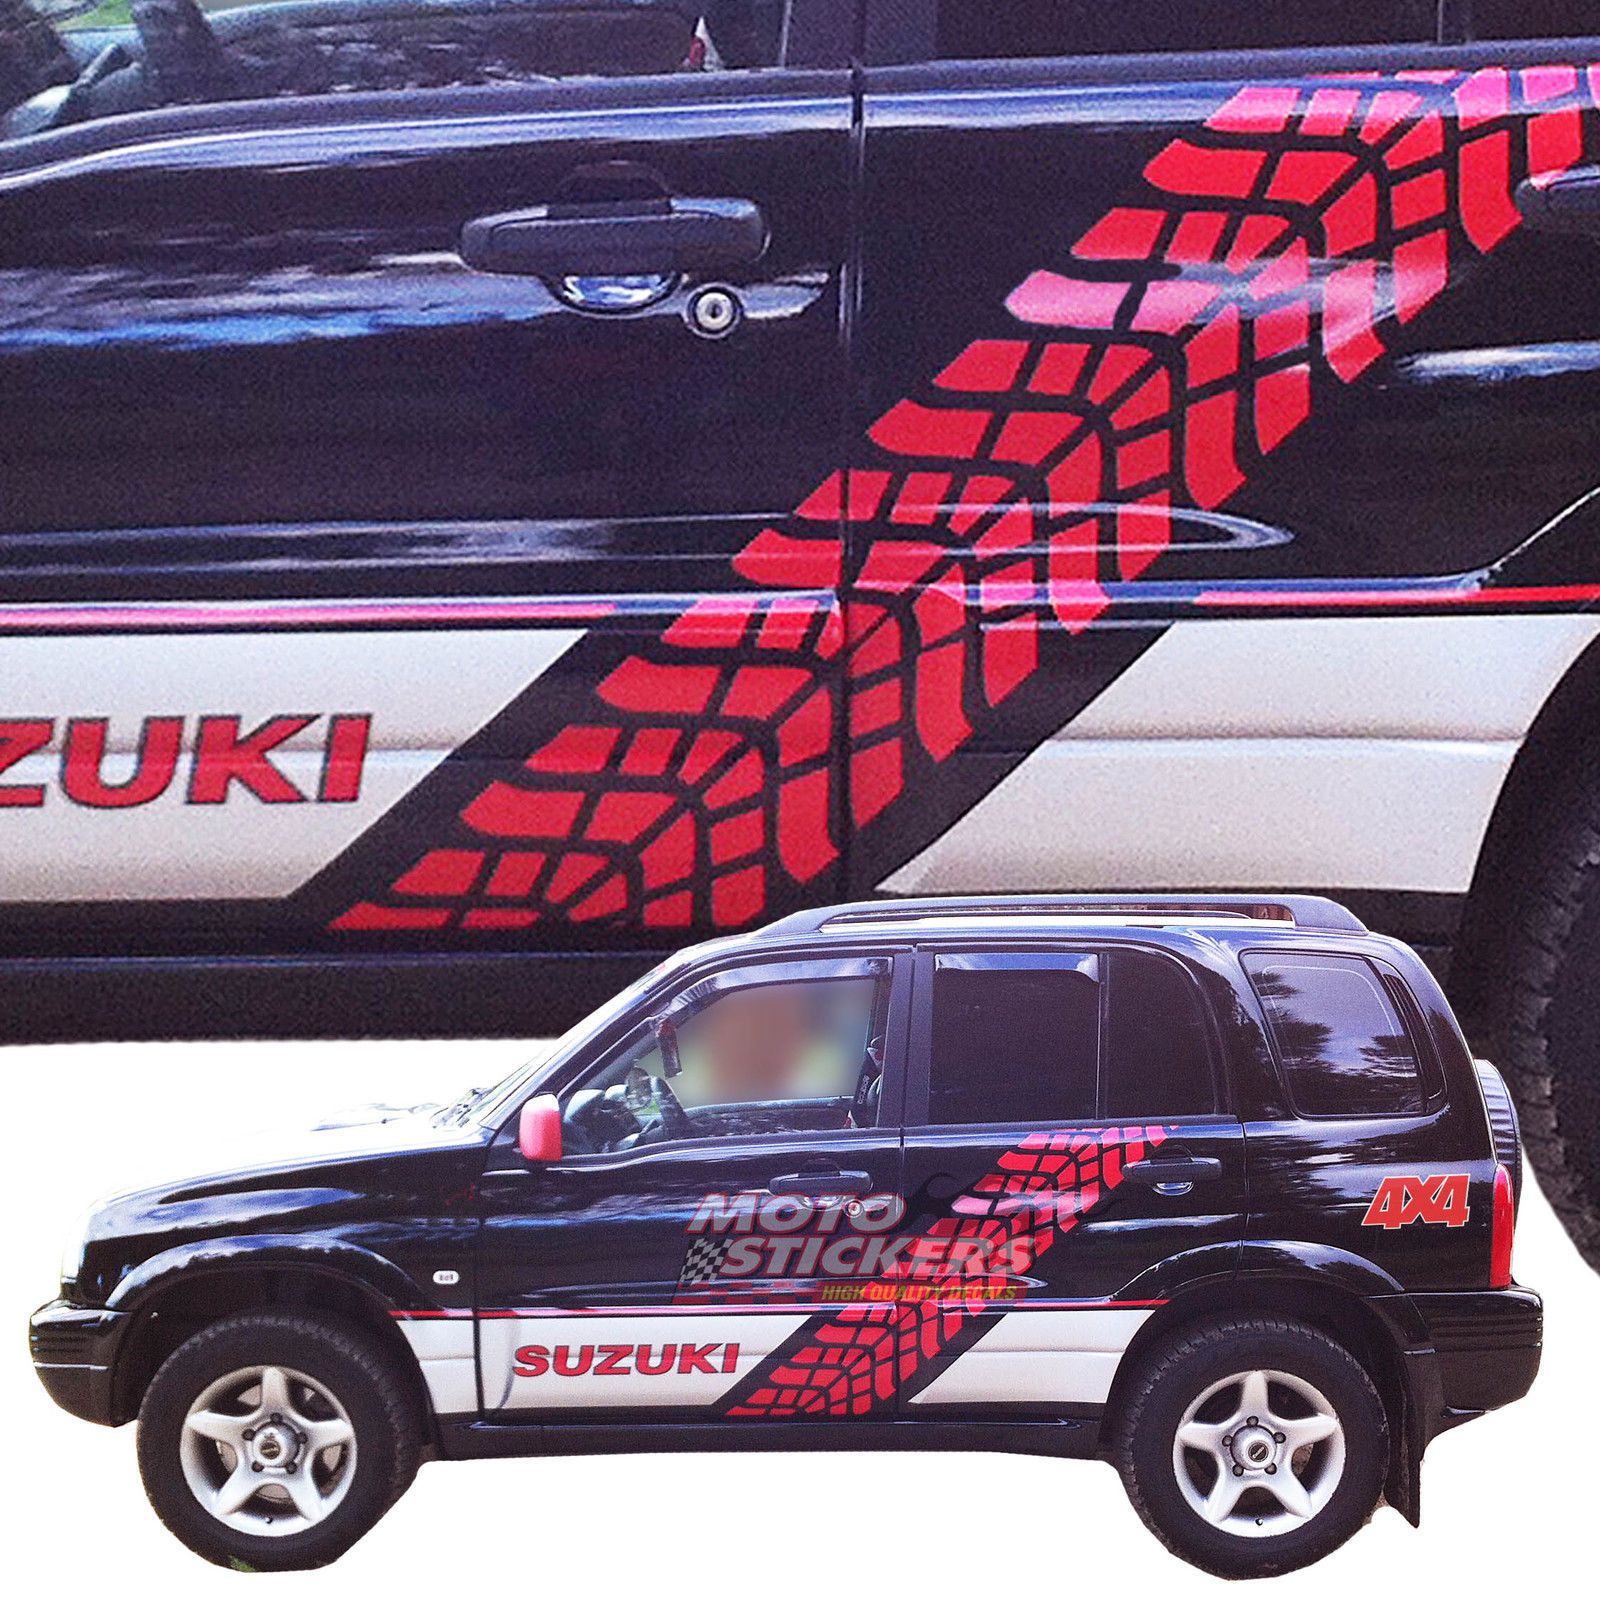 Suzuki_gran_vitara_kit_racing